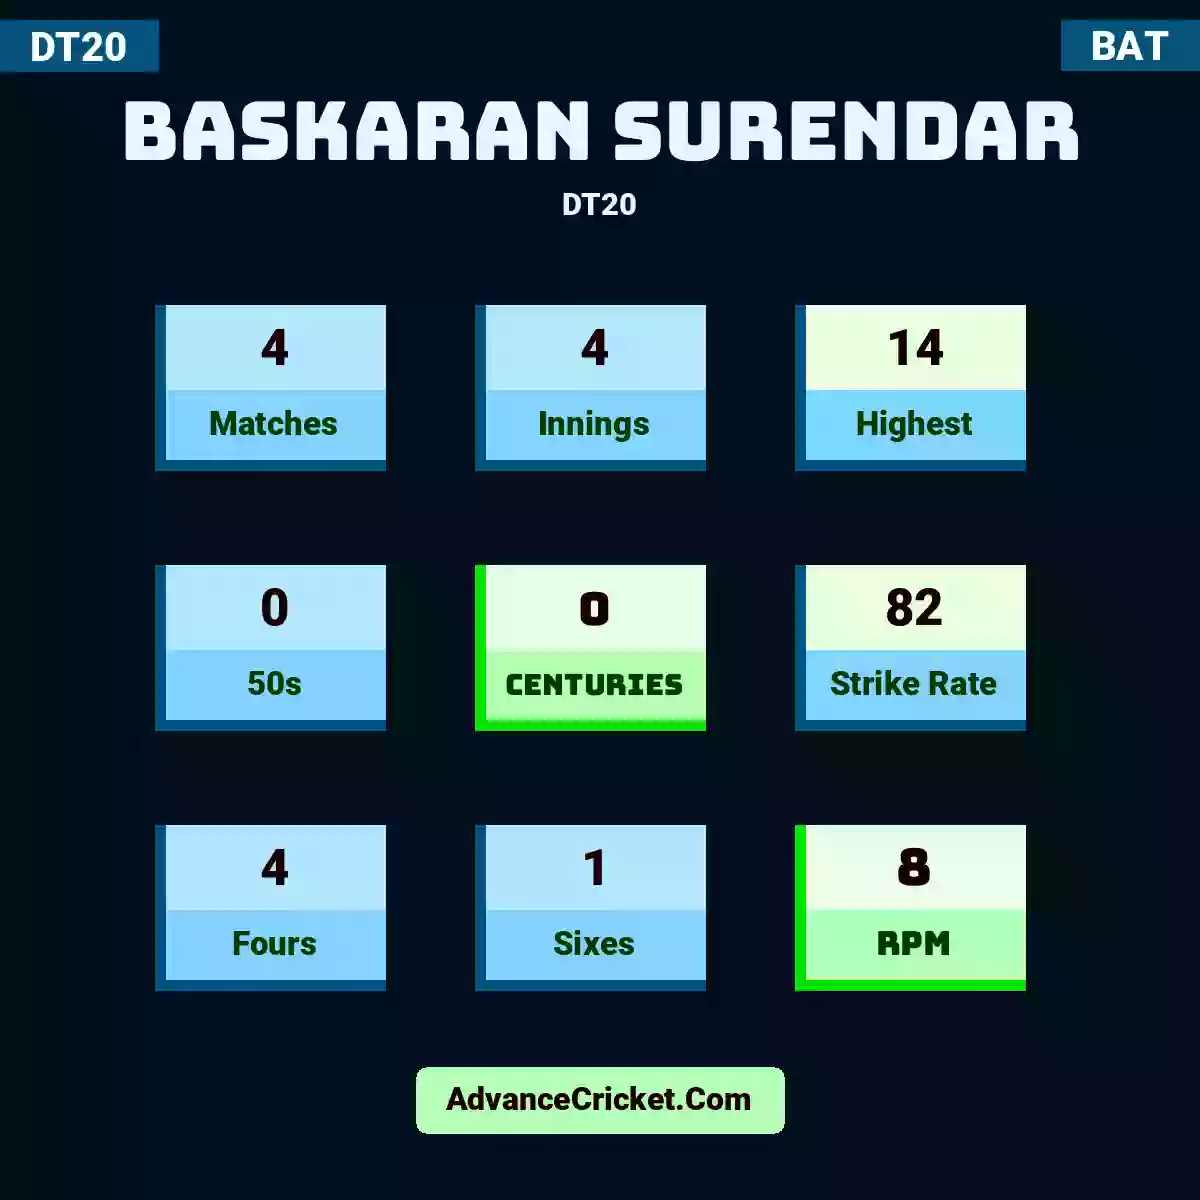 Baskaran Surendar DT20 , Baskaran Surendar played 4 matches, scored 14 runs as highest, 0 half-centuries, and 0 centuries, with a strike rate of 82. B.Surendar hit 4 fours and 1 sixes, with an RPM of 8.